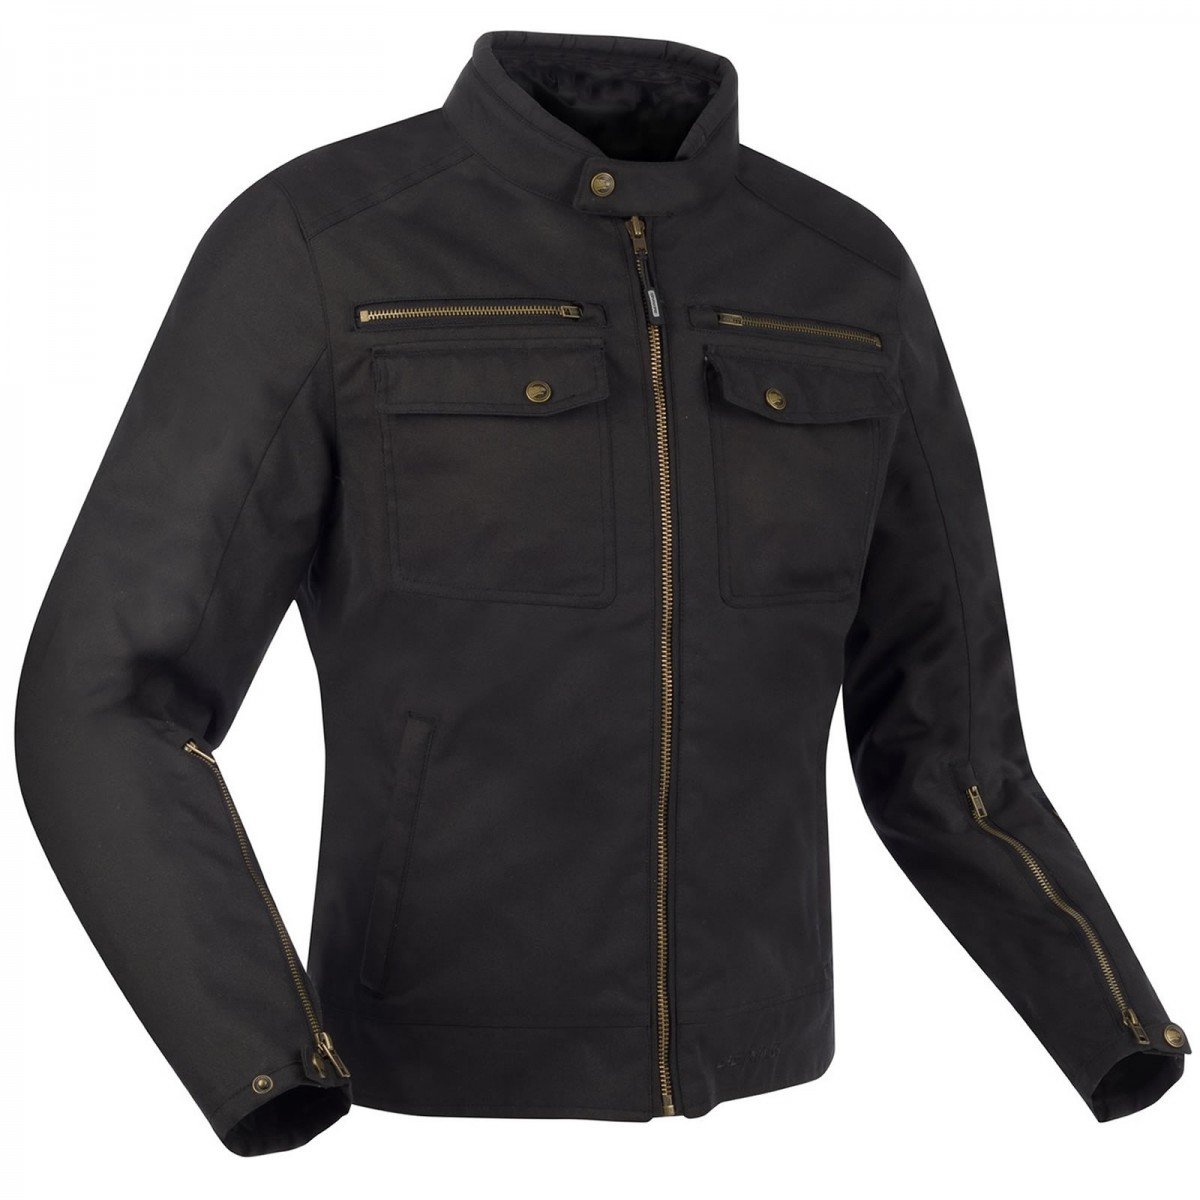 Image of Bering Winton Jacket Black Size M ID 3660815161937